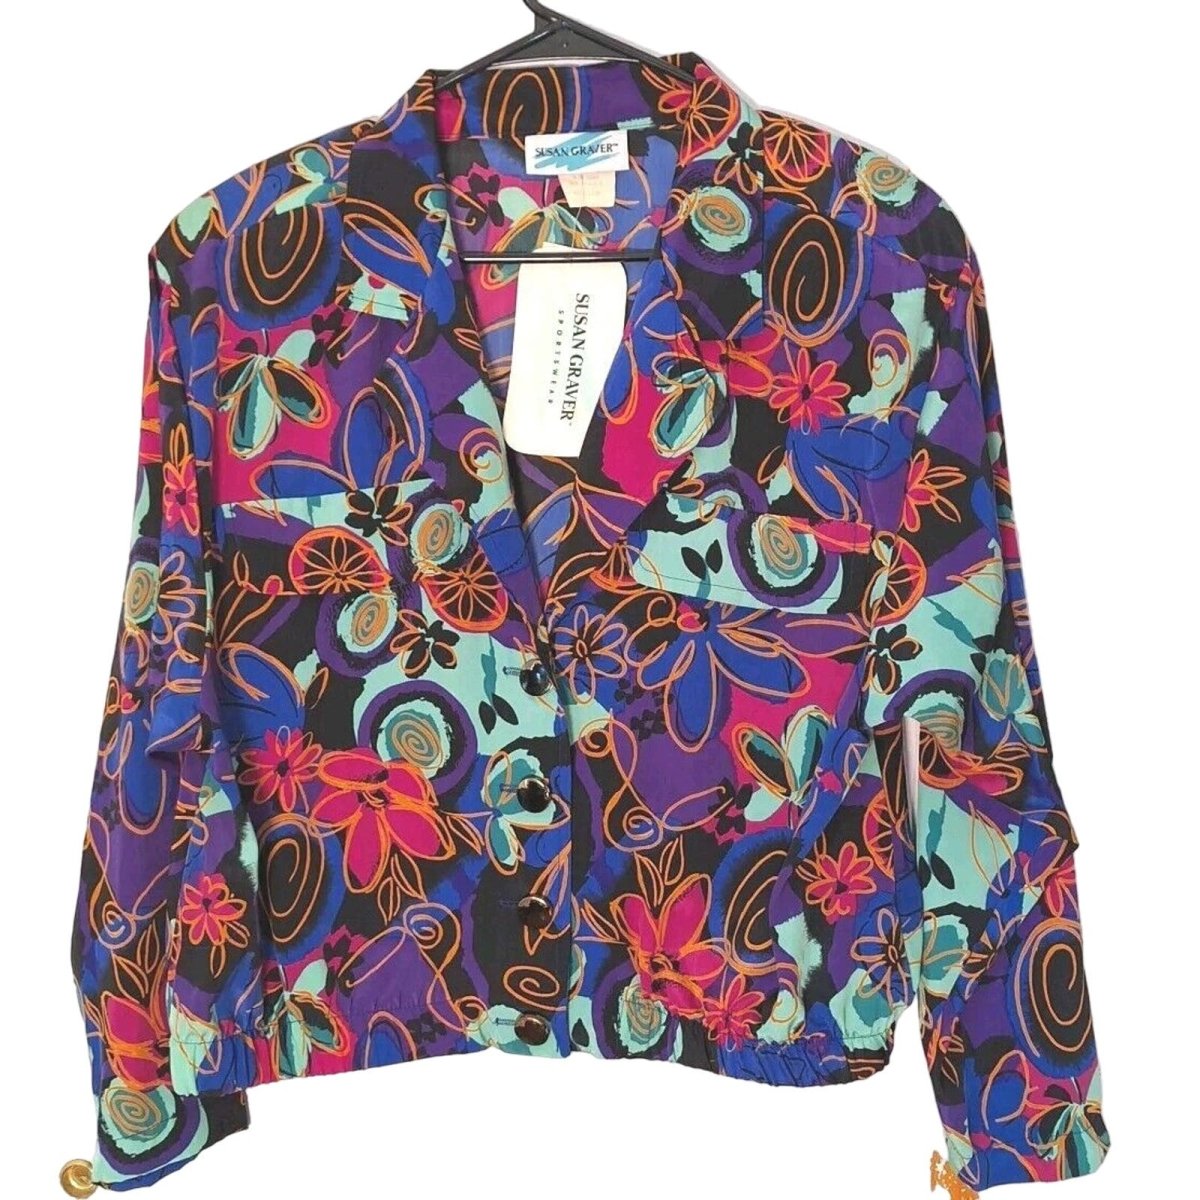 Vintage 80s/90s Bright Floral Lightweight Statement Jacket Women Size Medium - themallvintage The Mall Vintage